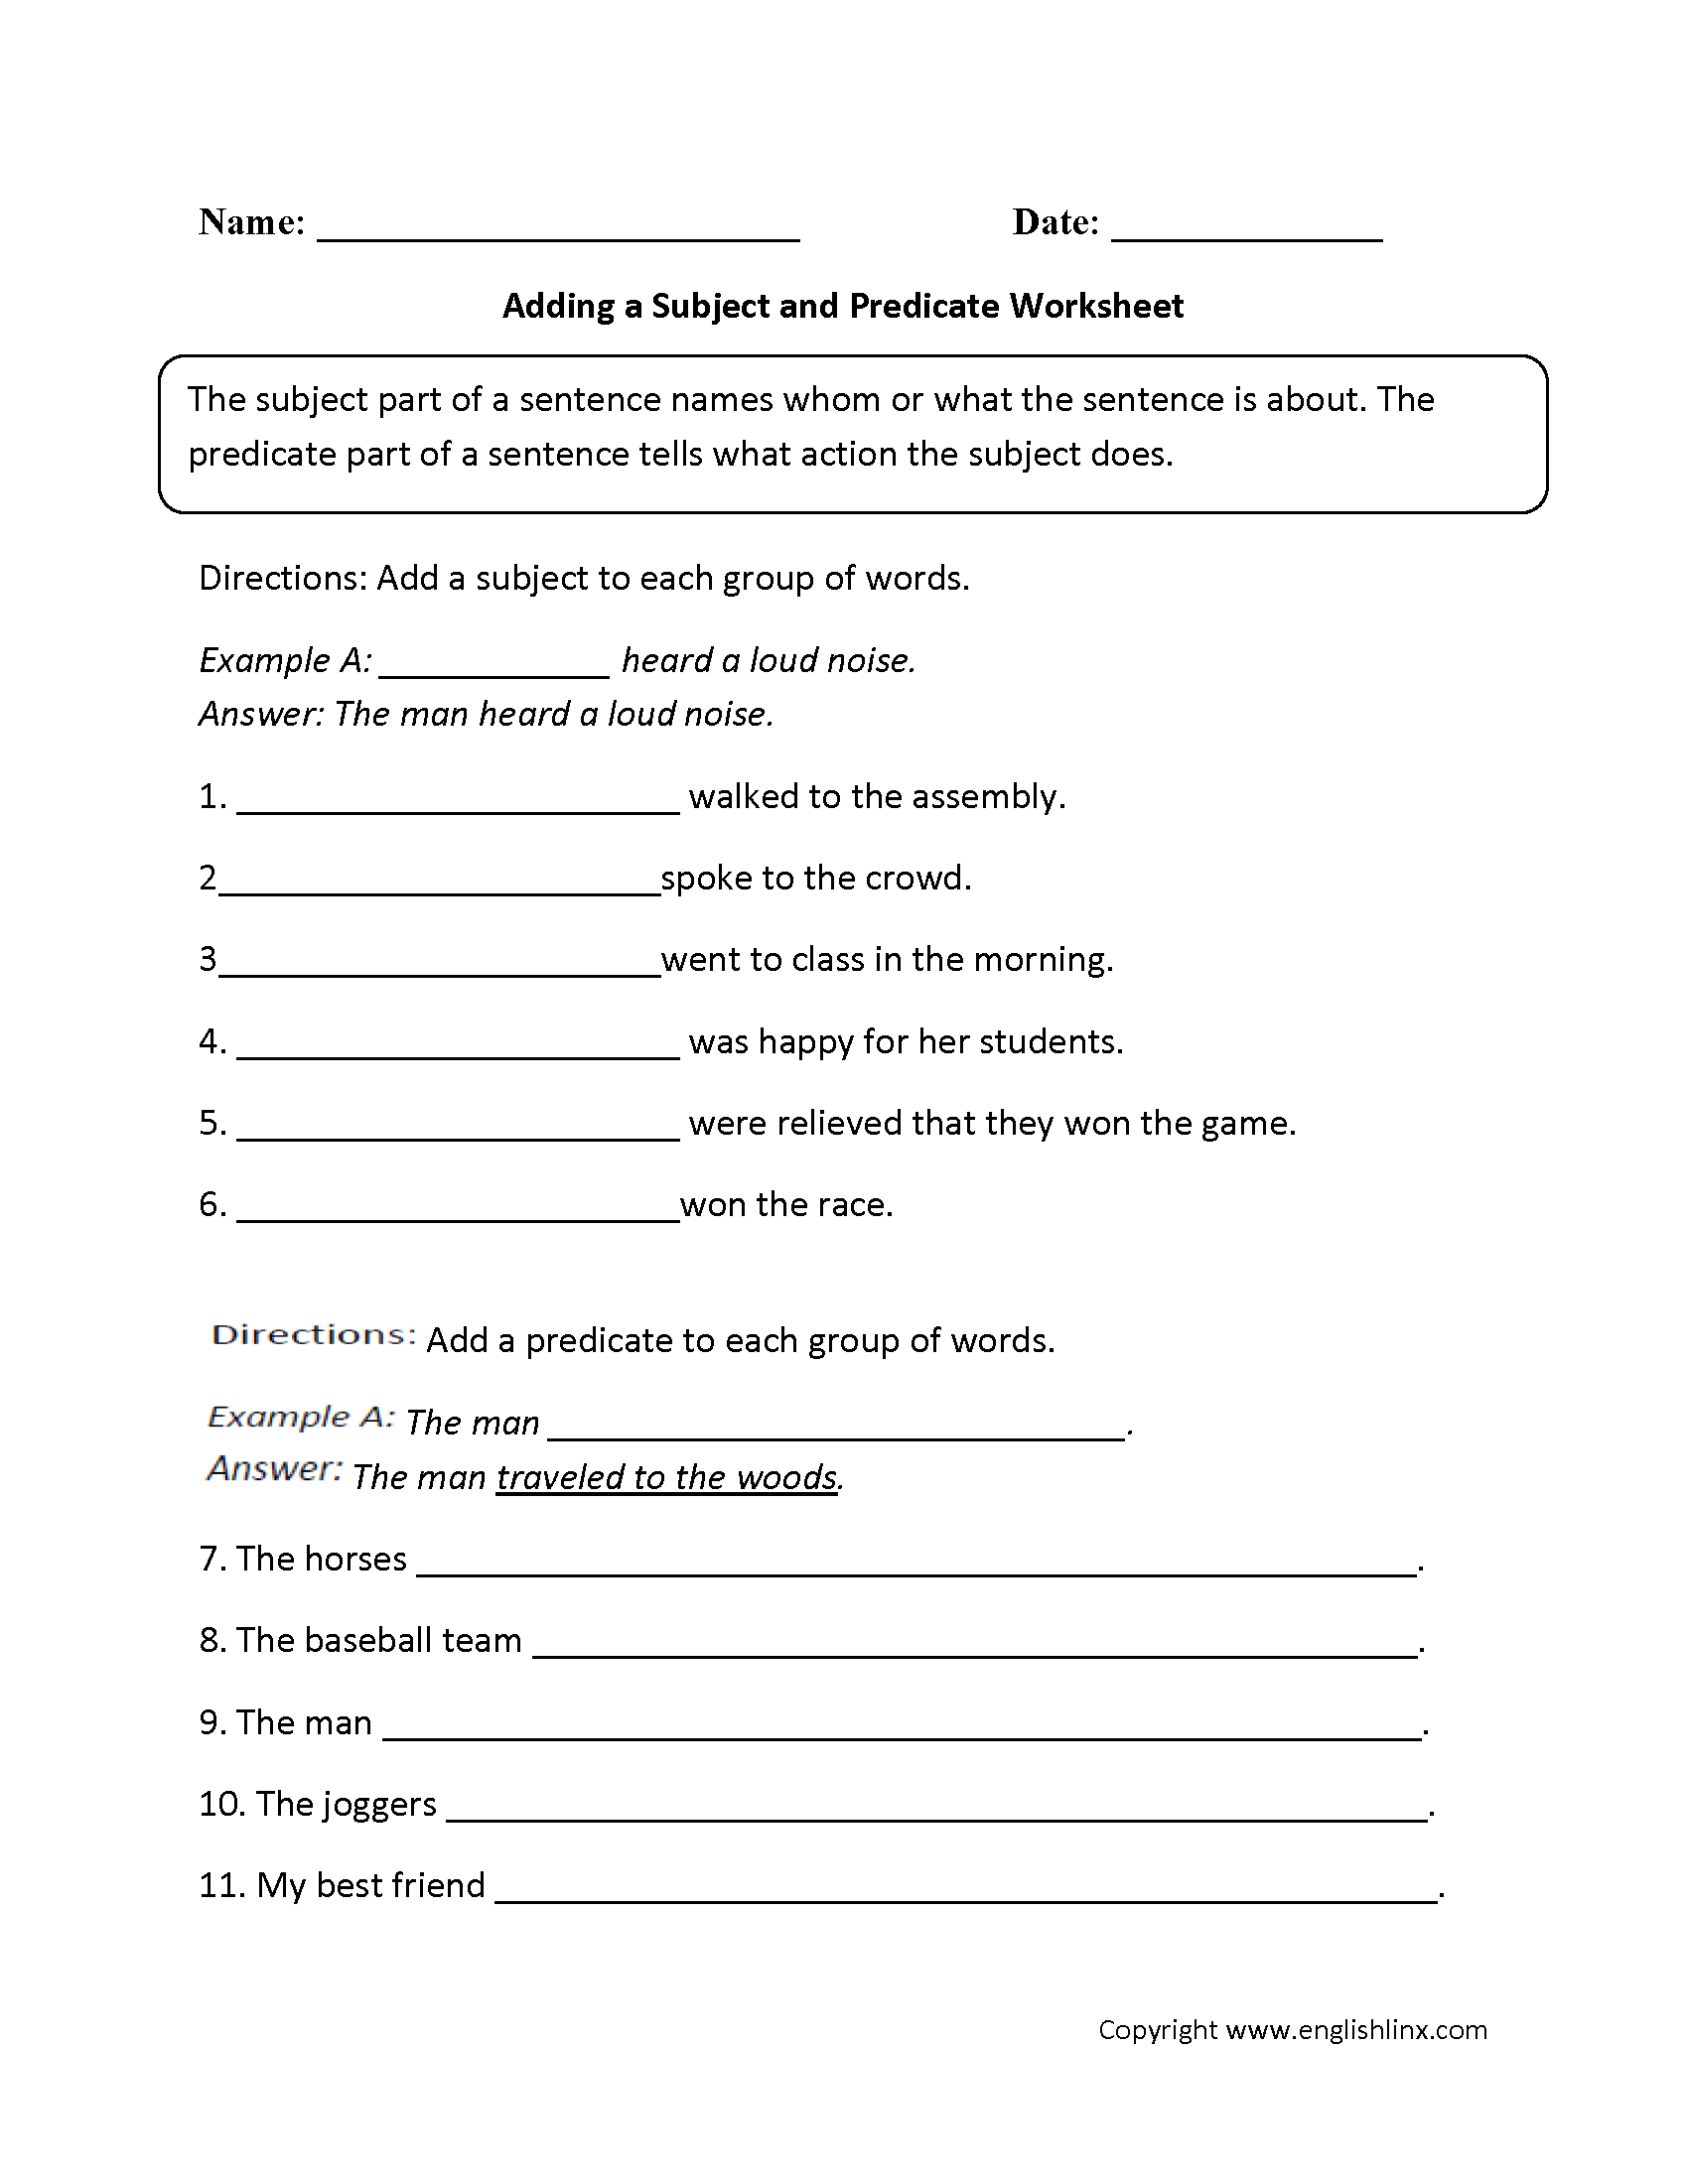 Englishlinx | Subject And Predicate Worksheets - 9Th Grade English | Year 9 English Worksheets Printable